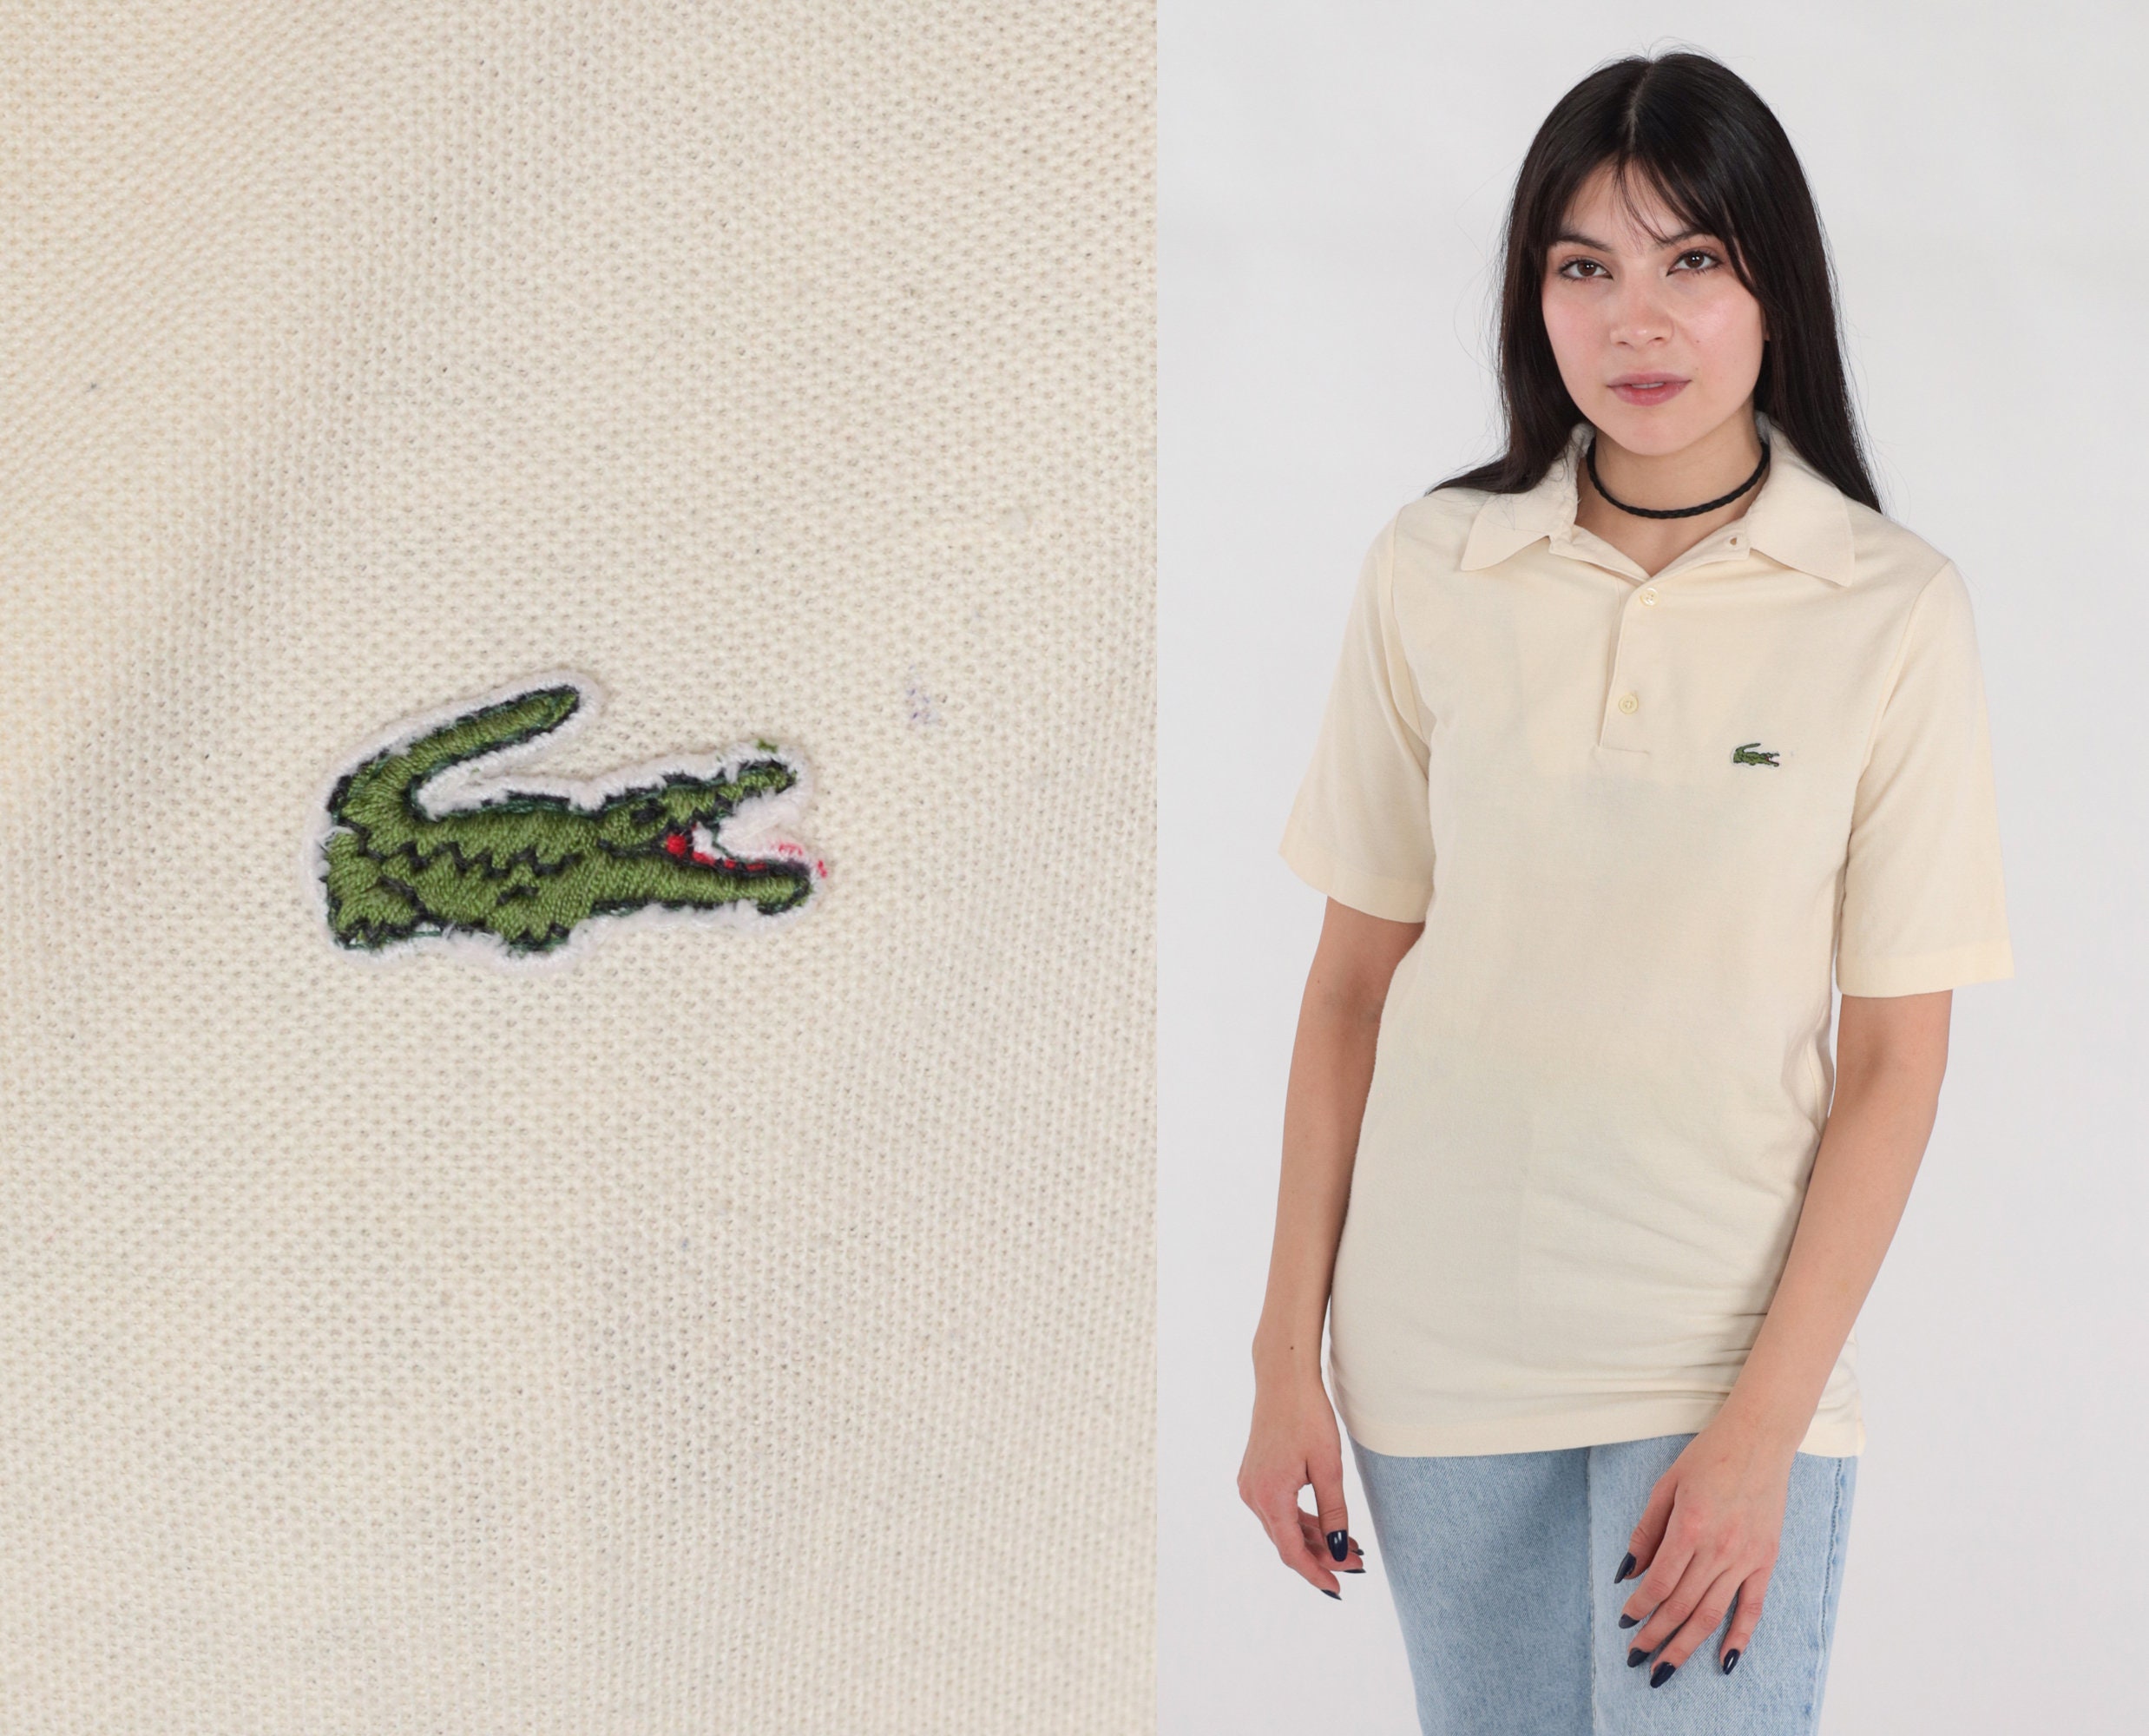 Lacoste Polo Shirt Small 1980s Top Cream Etsy 80s Preppy Collar Collared Basic Crocodile - Plain Retro T-shirt Vintage Simple S Shirt Neutral Izod